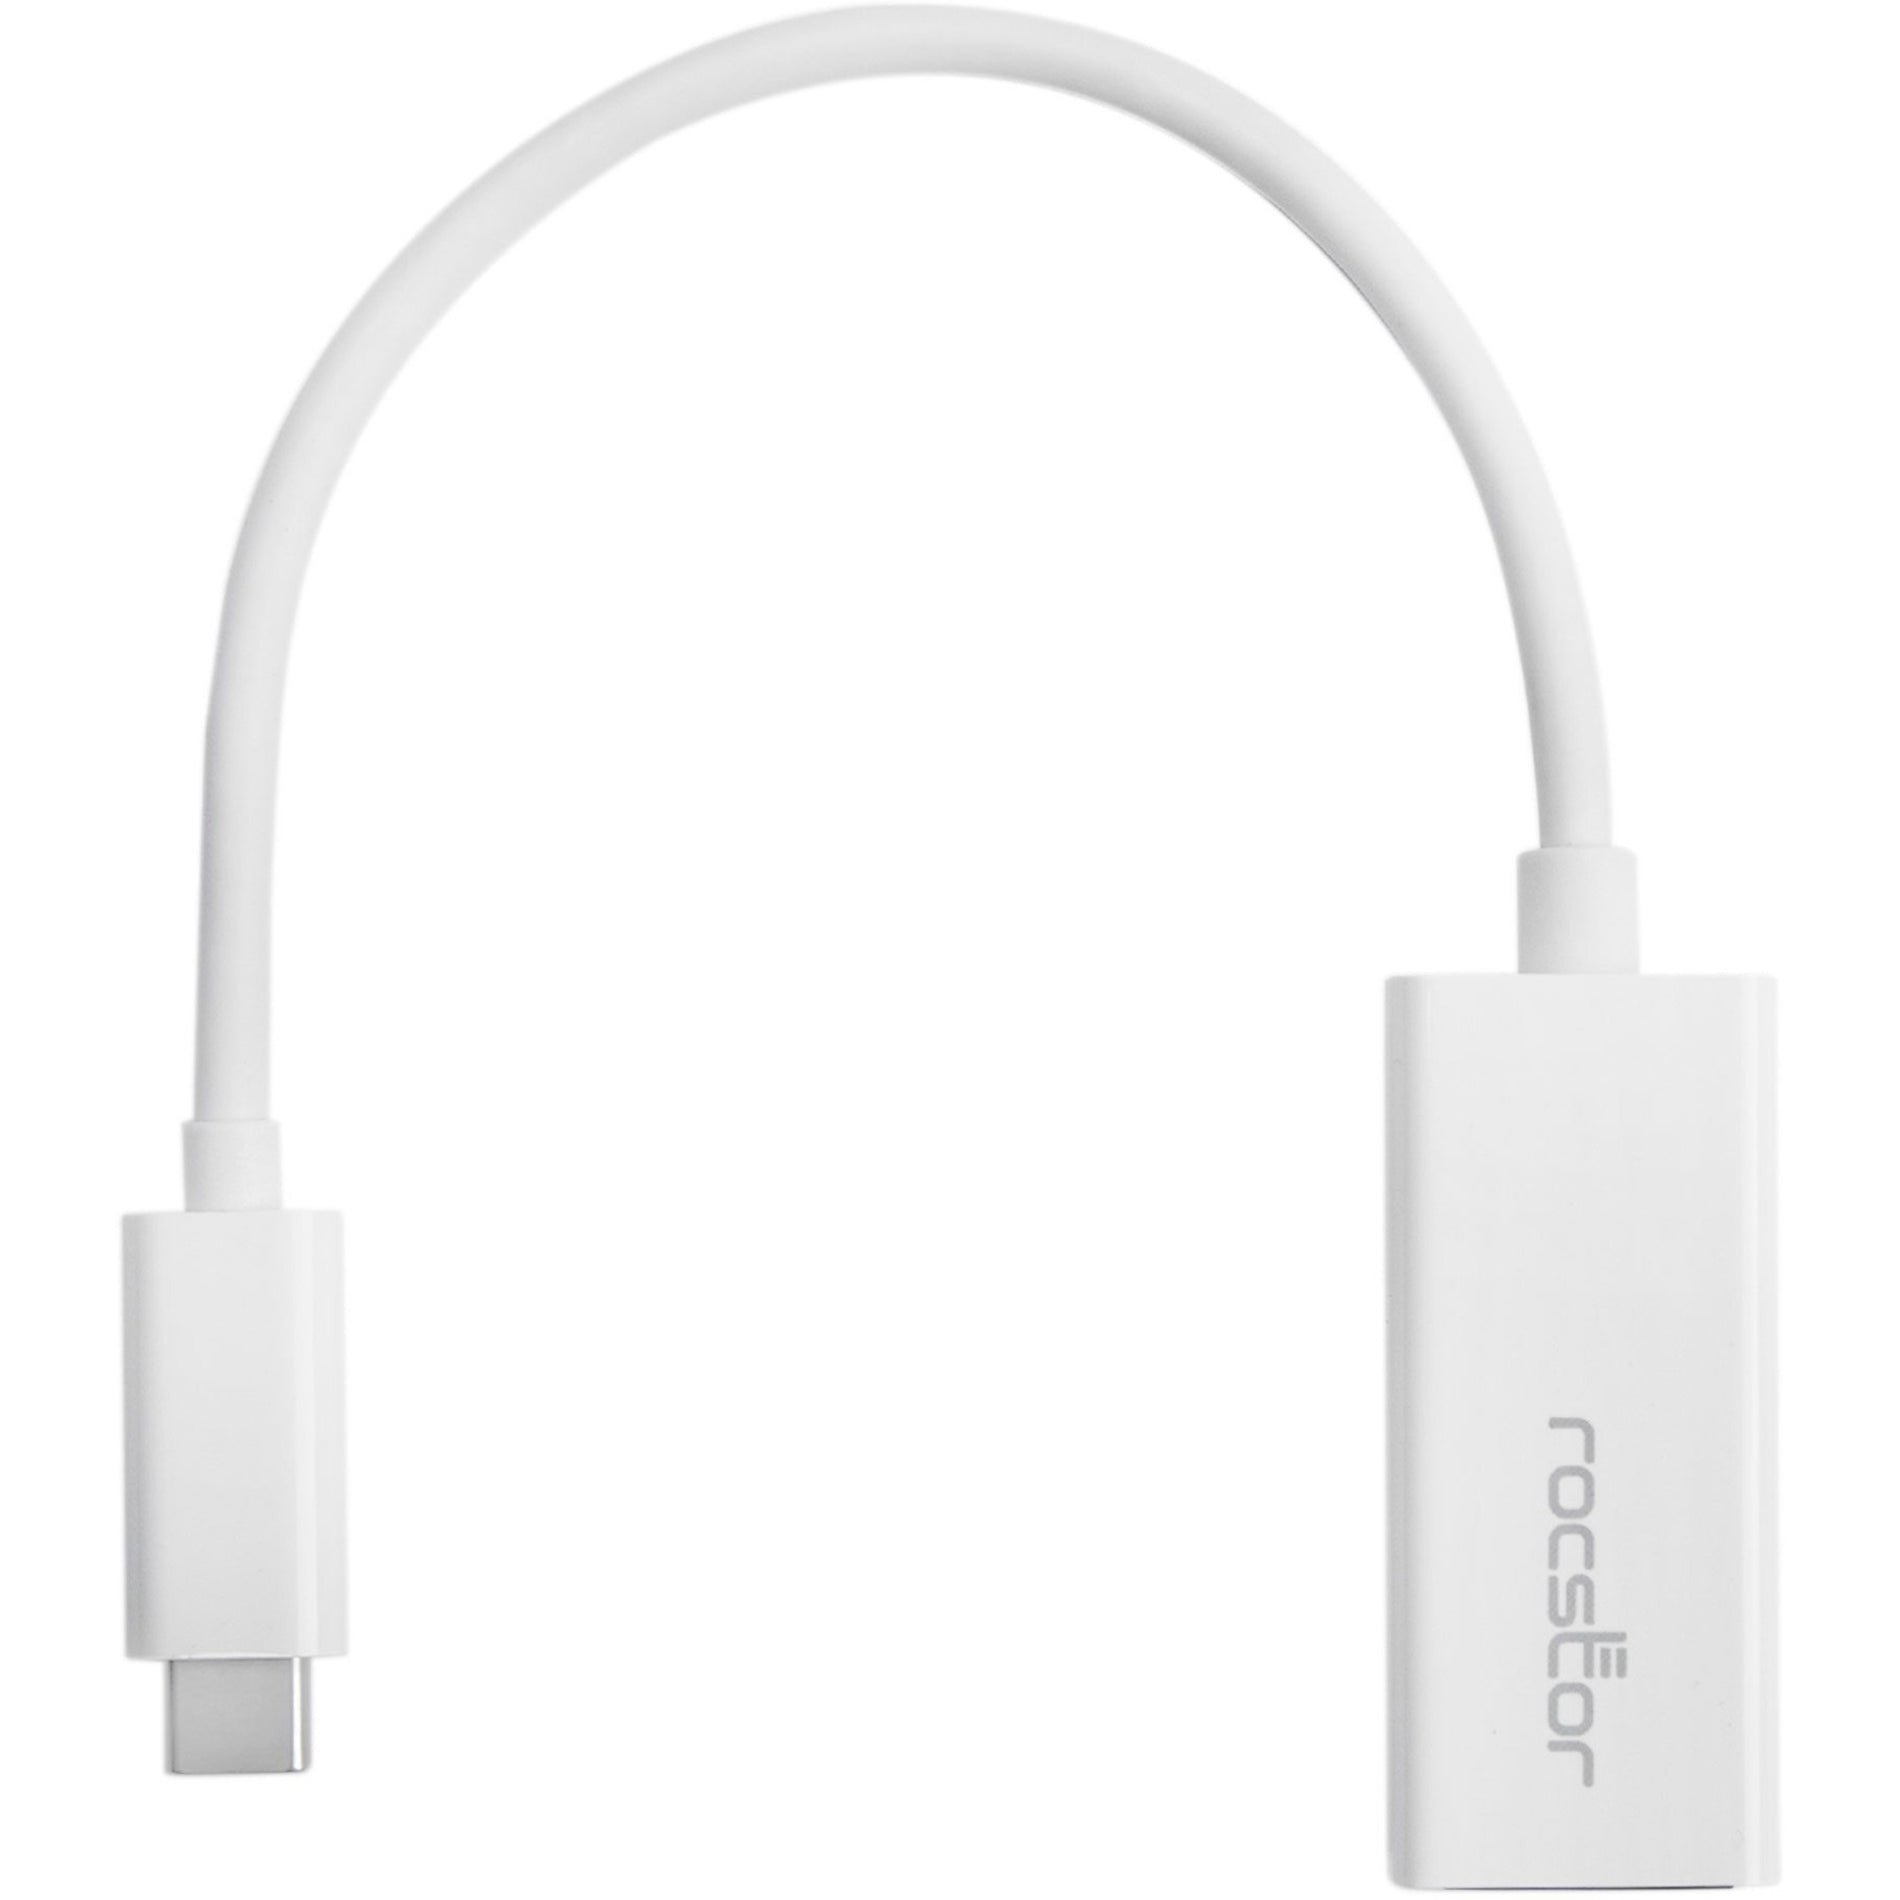 Rocstor Y10A173-W1 محول شبكة USB-C إلى جيجابت 10/100/1000 متميز - أبيض USB-C 3.1 إلى جيجابت 1000 ميجابت  روكستور